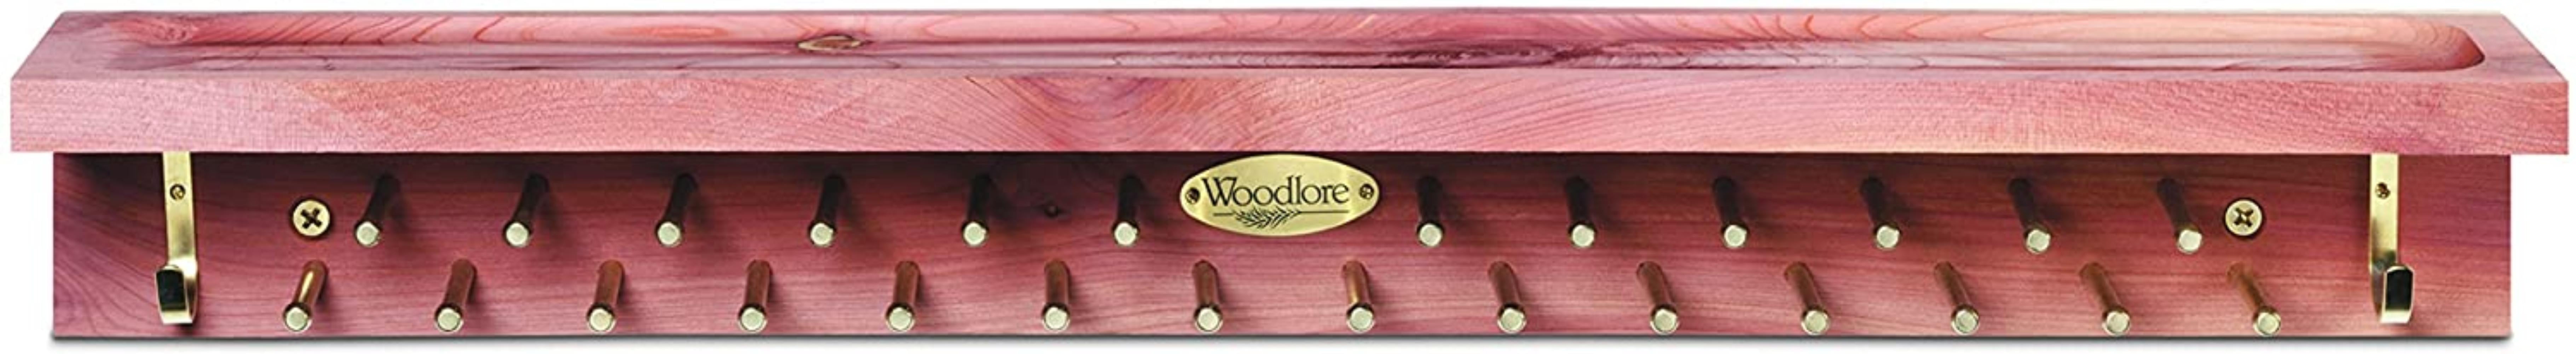 Woodlore 82027 Accessory Mate Woodlore Cedar Products 